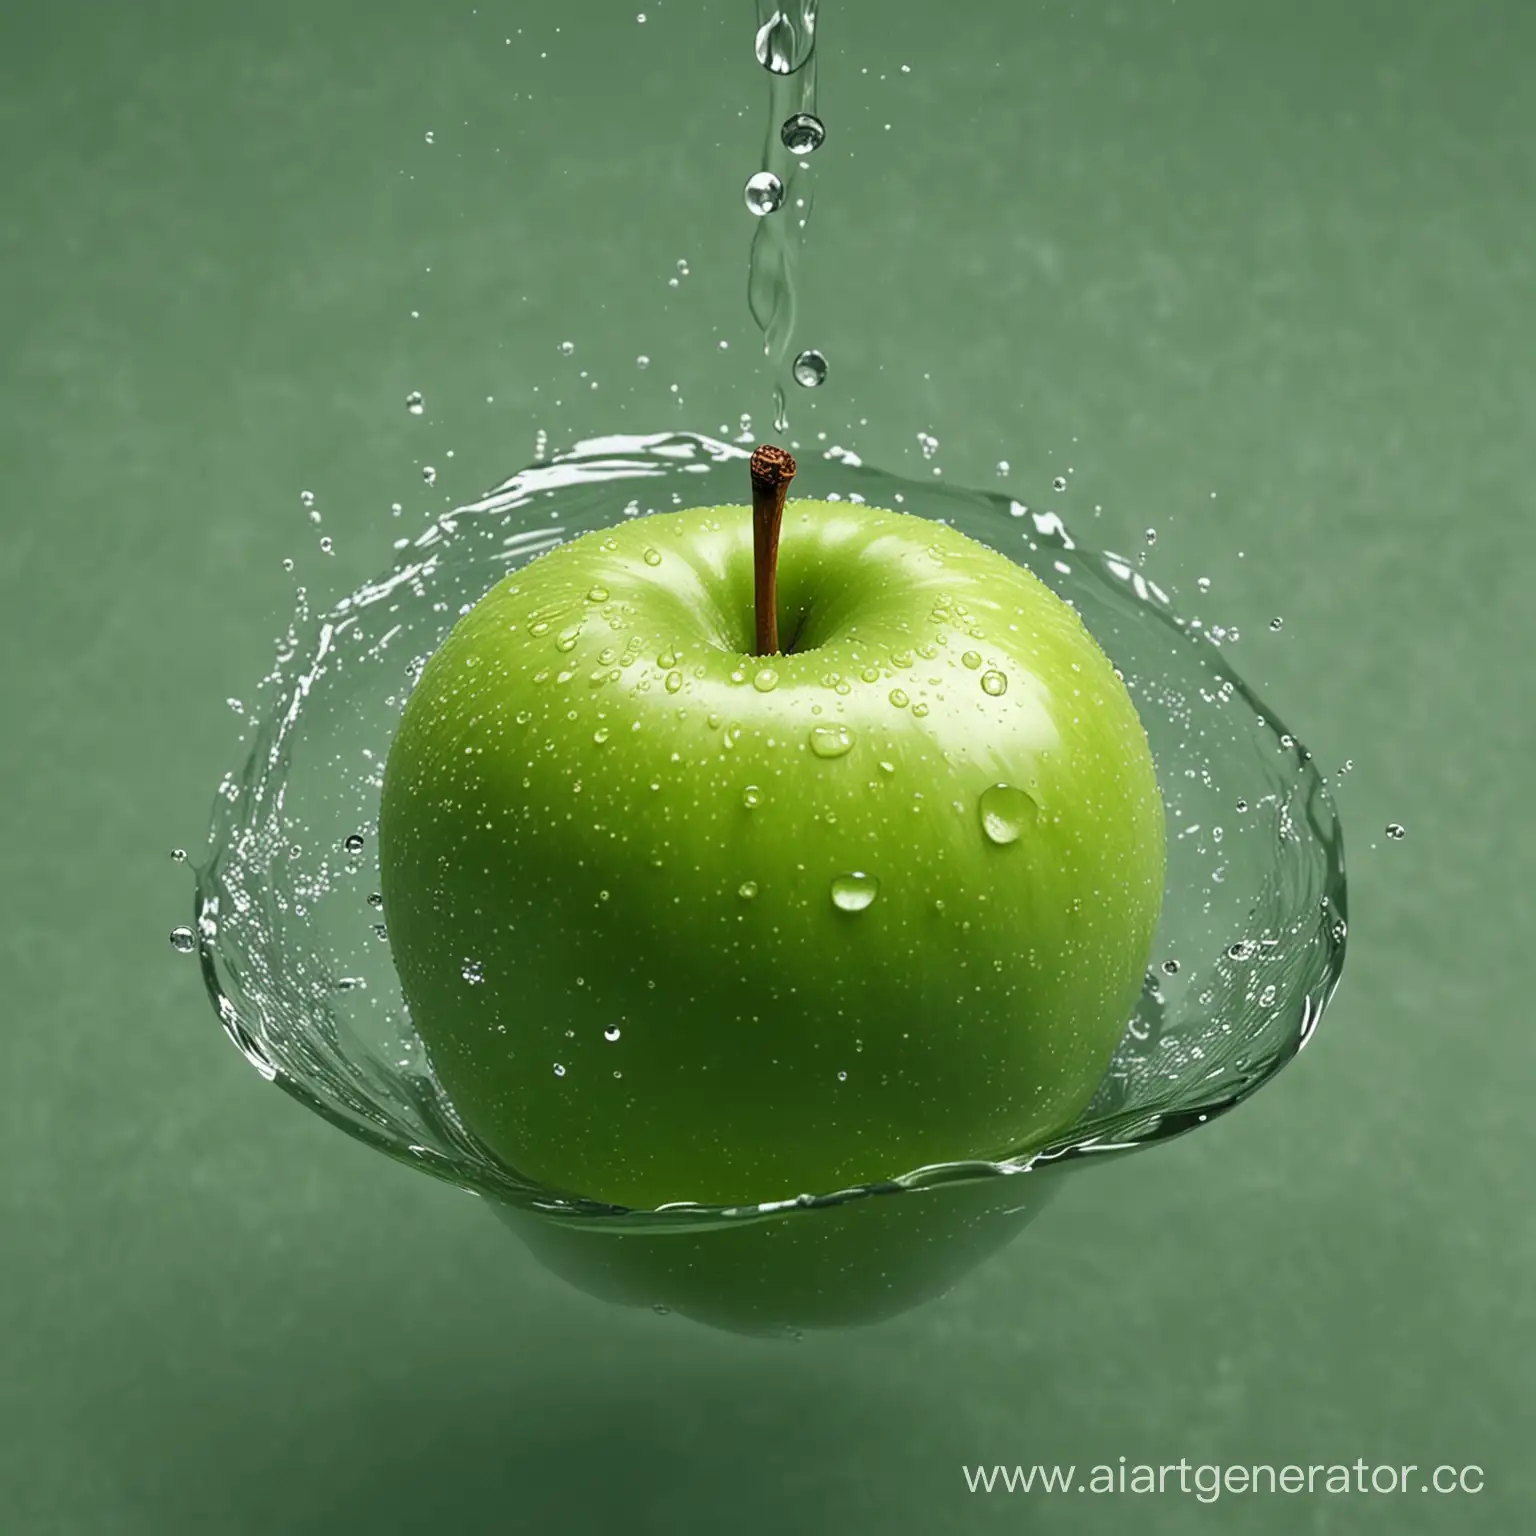 Rippling-Rhapsody-Green-Apple-Submerged-in-Crystal-Clear-Water